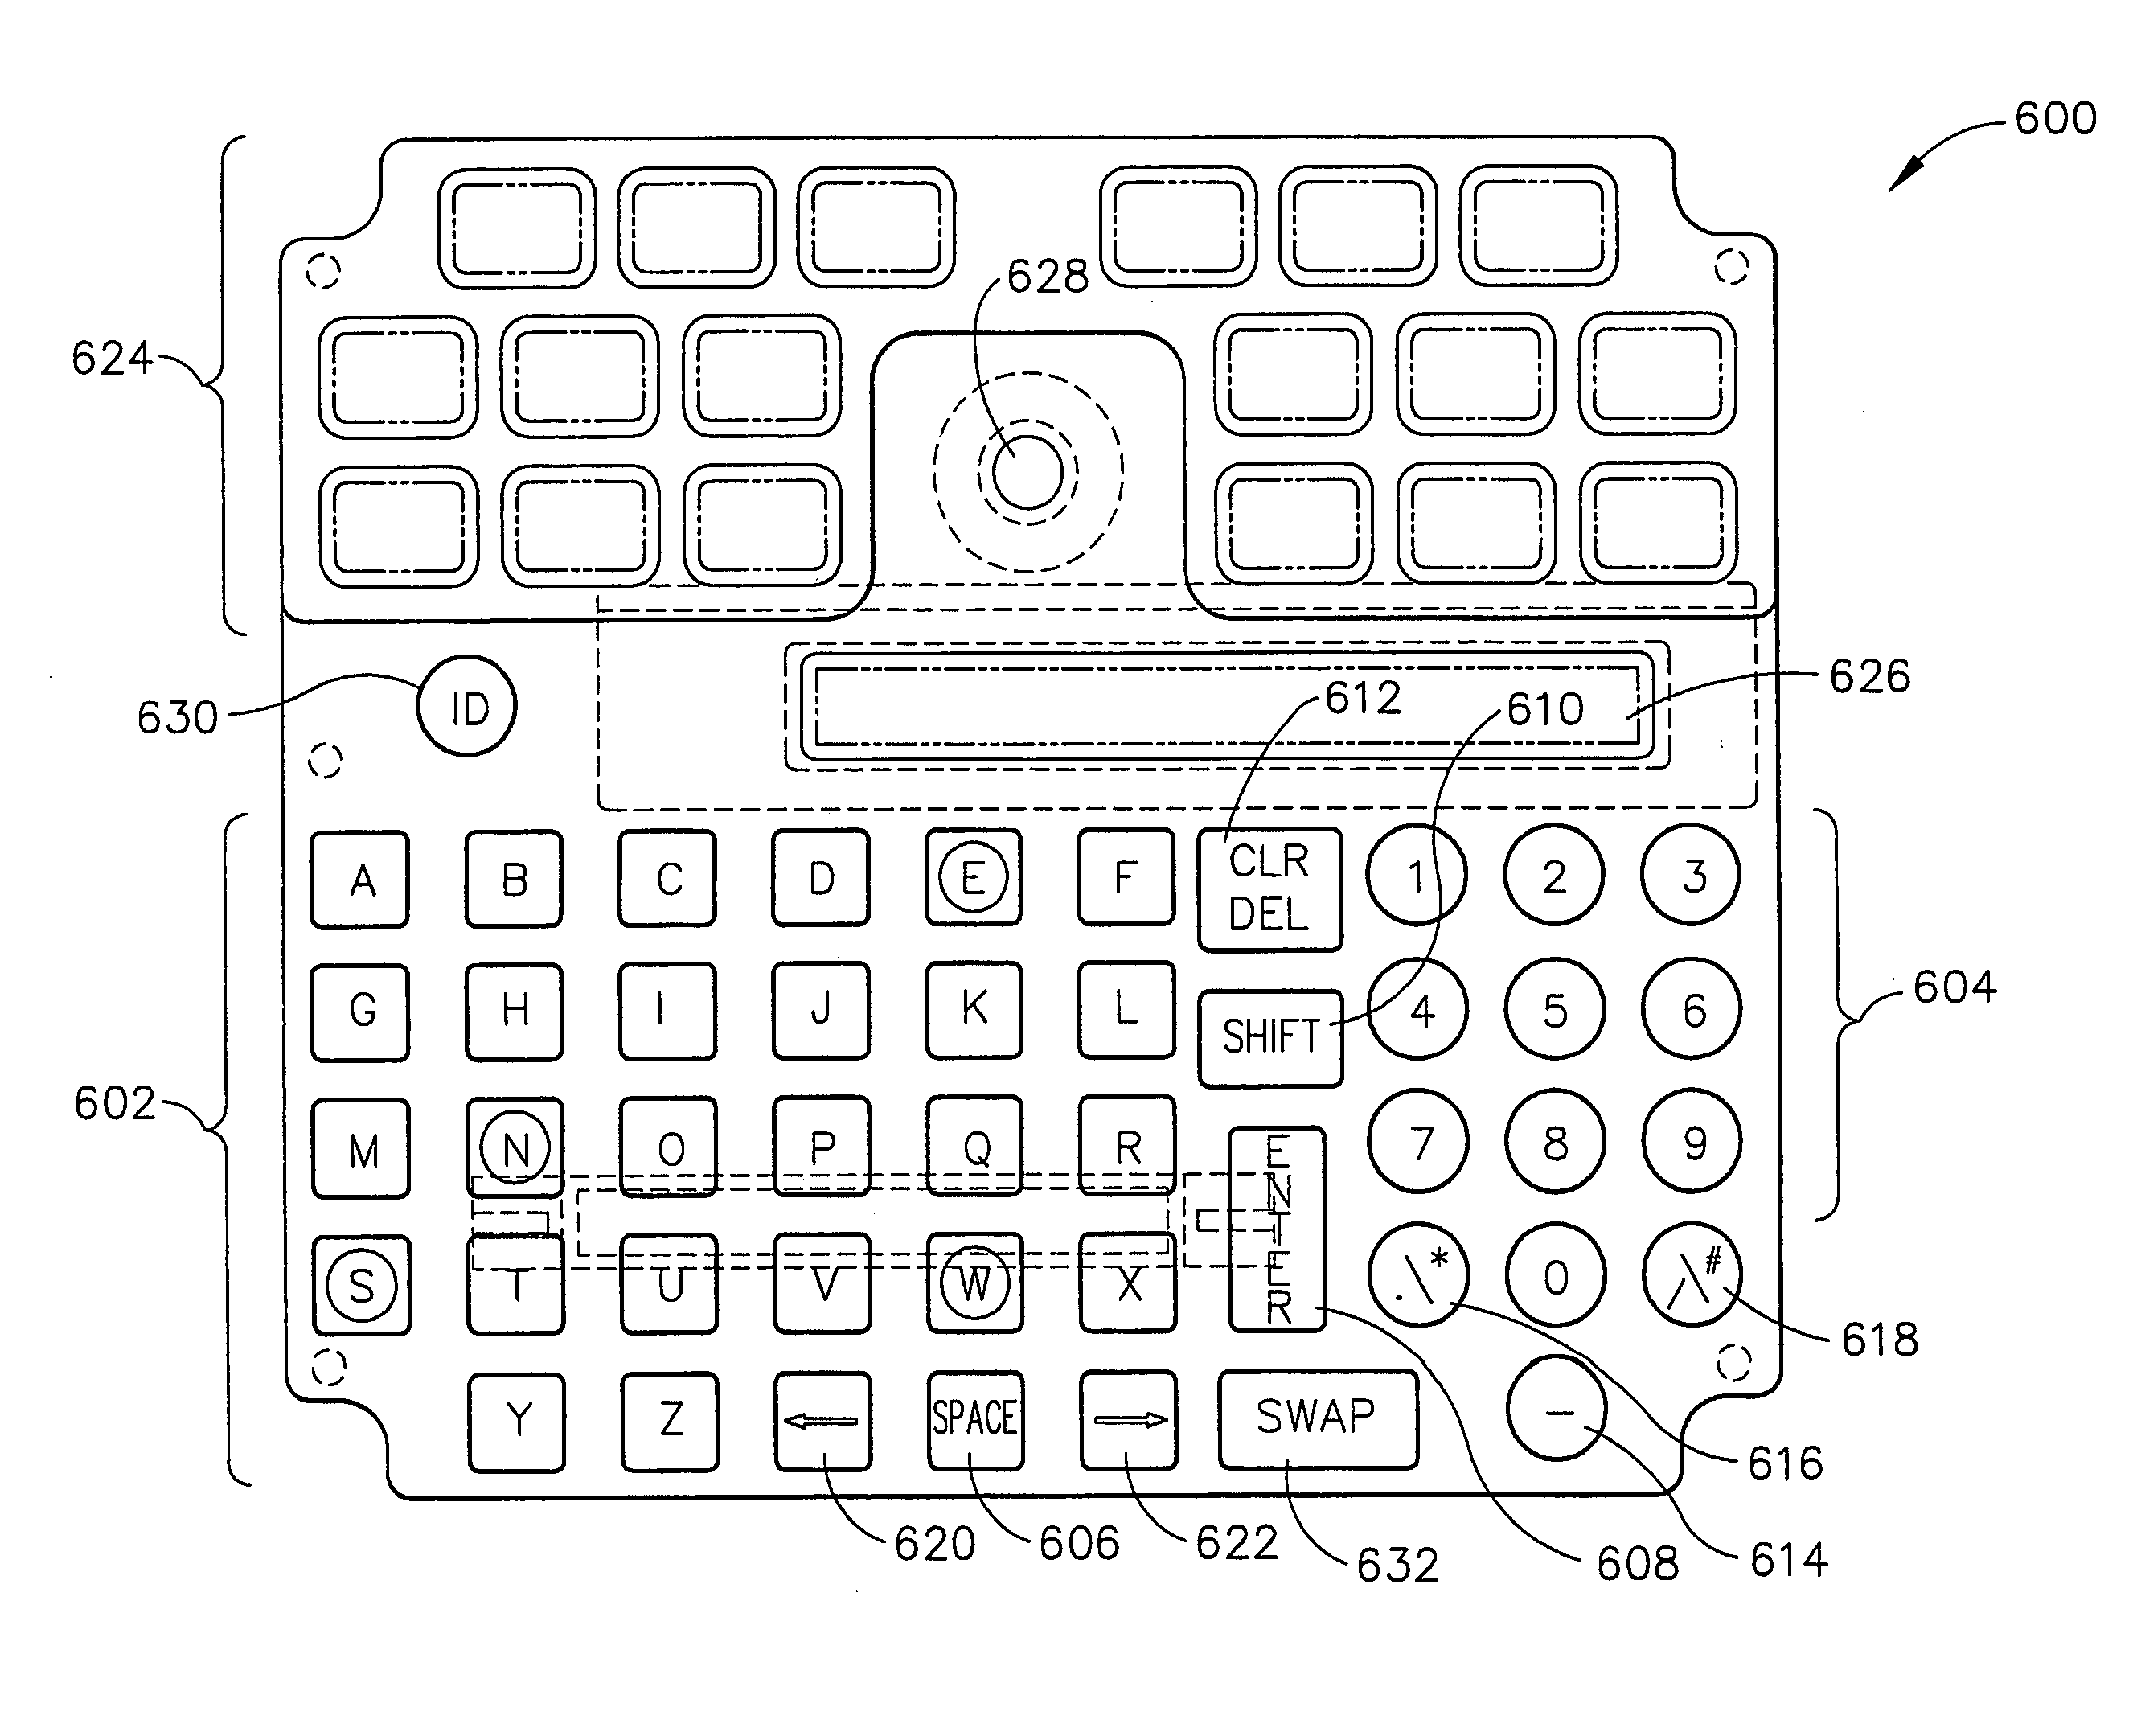 Multifunction keyboard for advanced cursor driven avionic flight decks